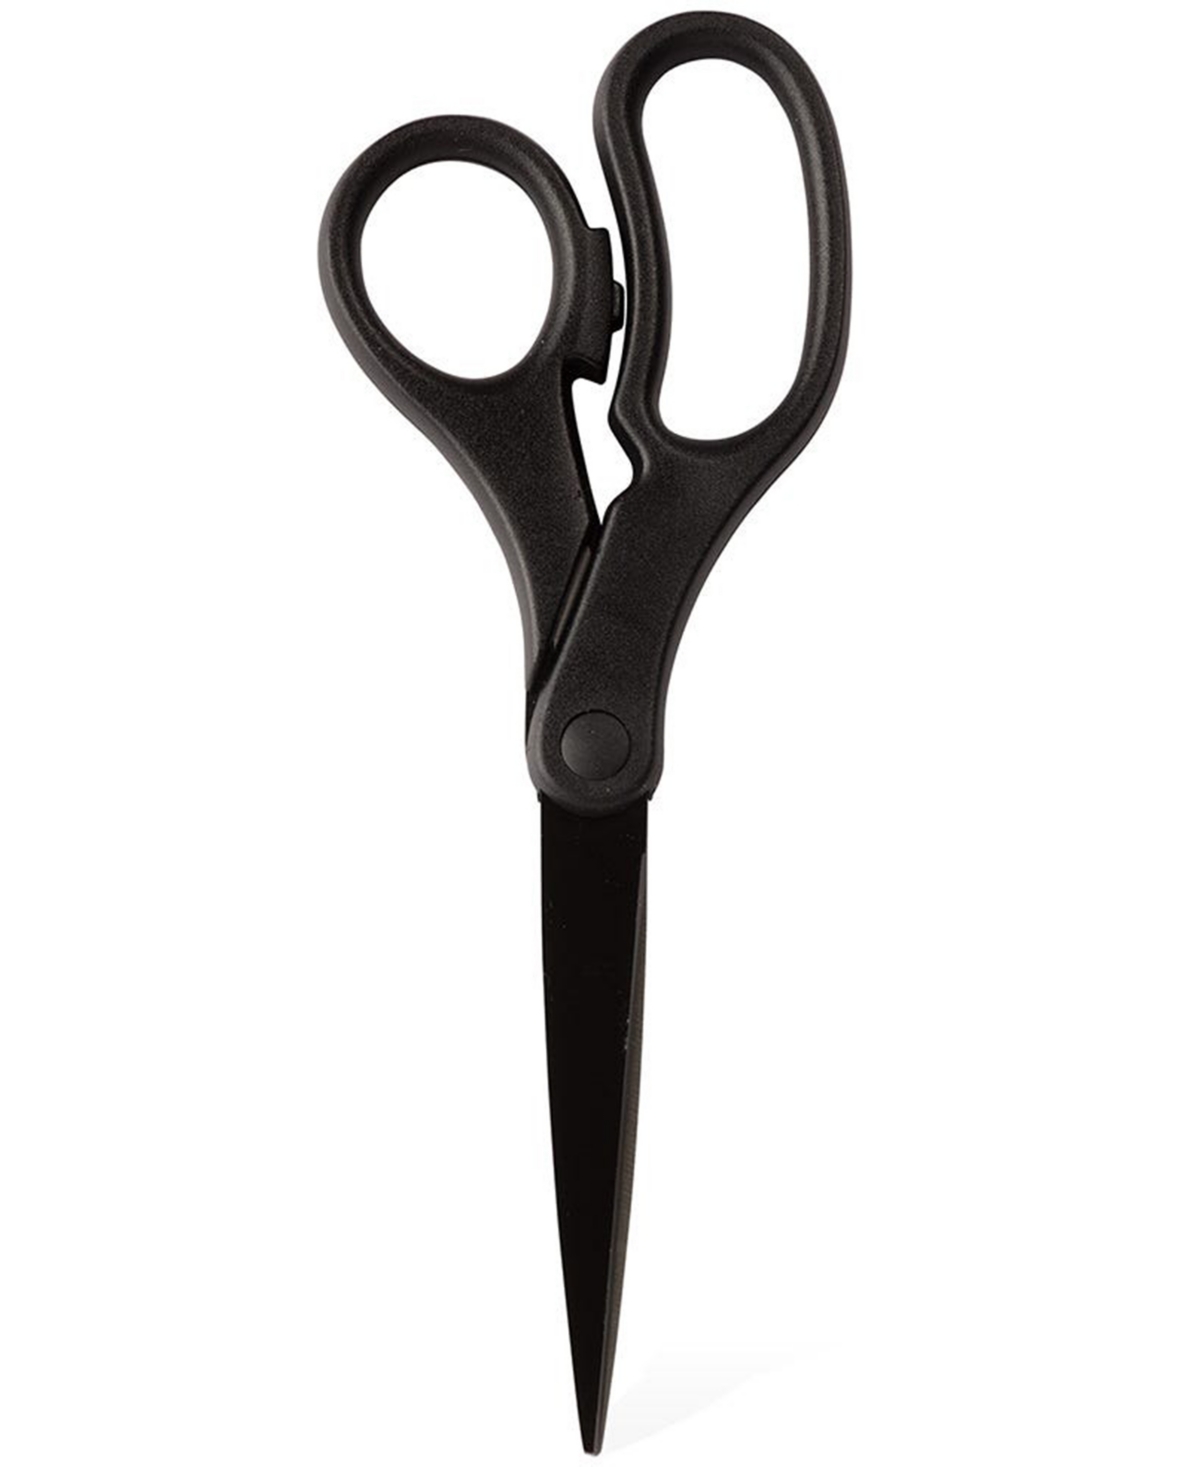 Multi-Purpose Precision Scissors - 8" - Ergonomic Handle Stainless Steel Blades - Sold Individually - Black